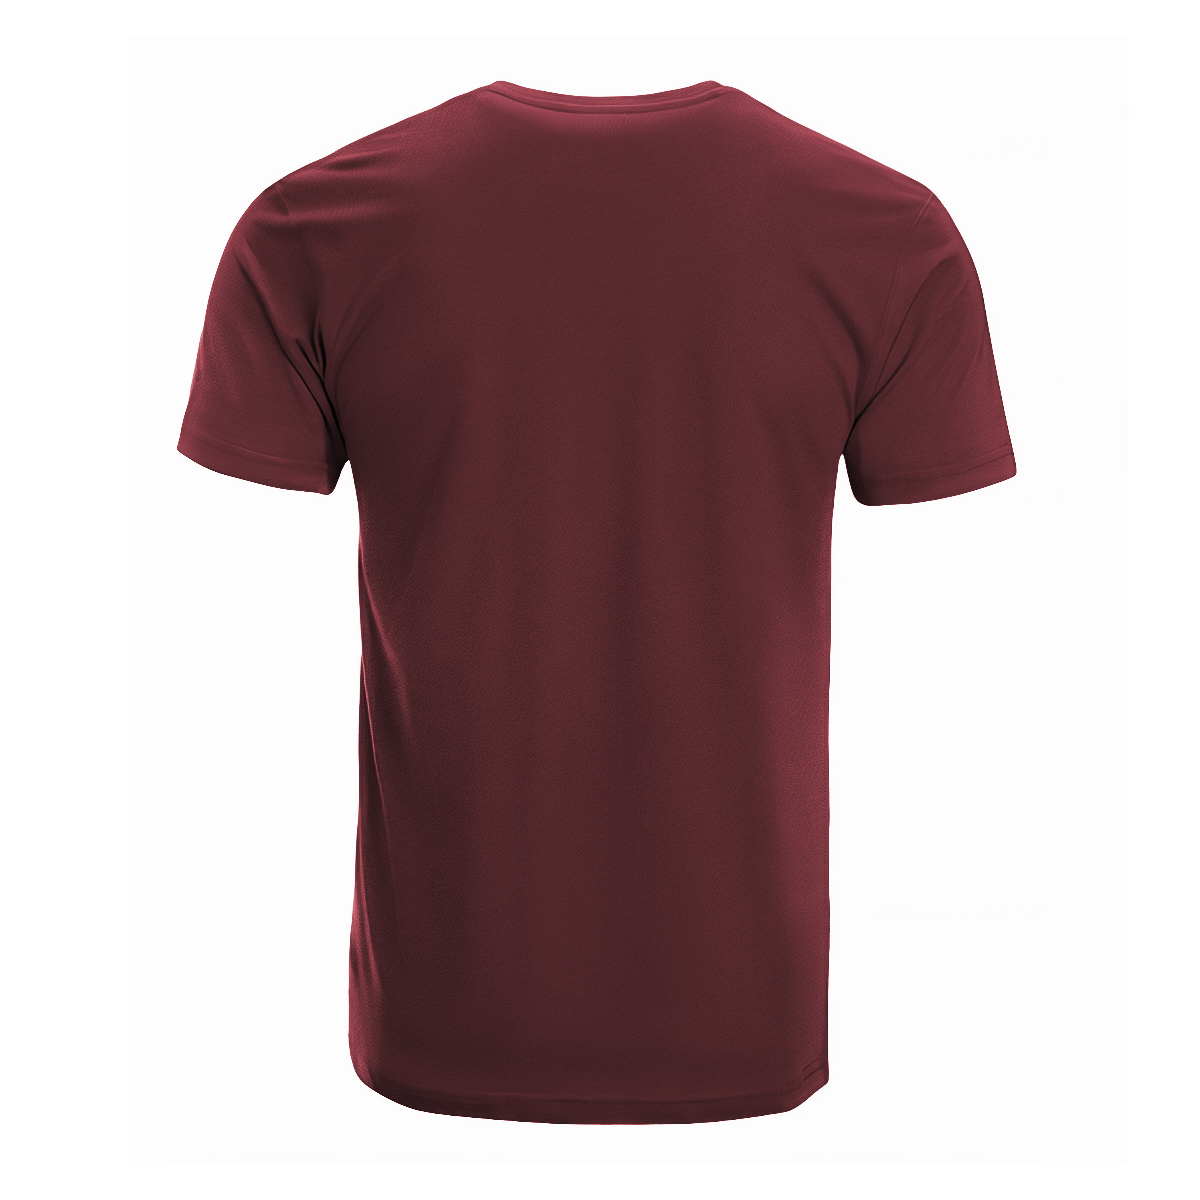 Morrison Tartan Crest T-shirt - I'm not yelling style